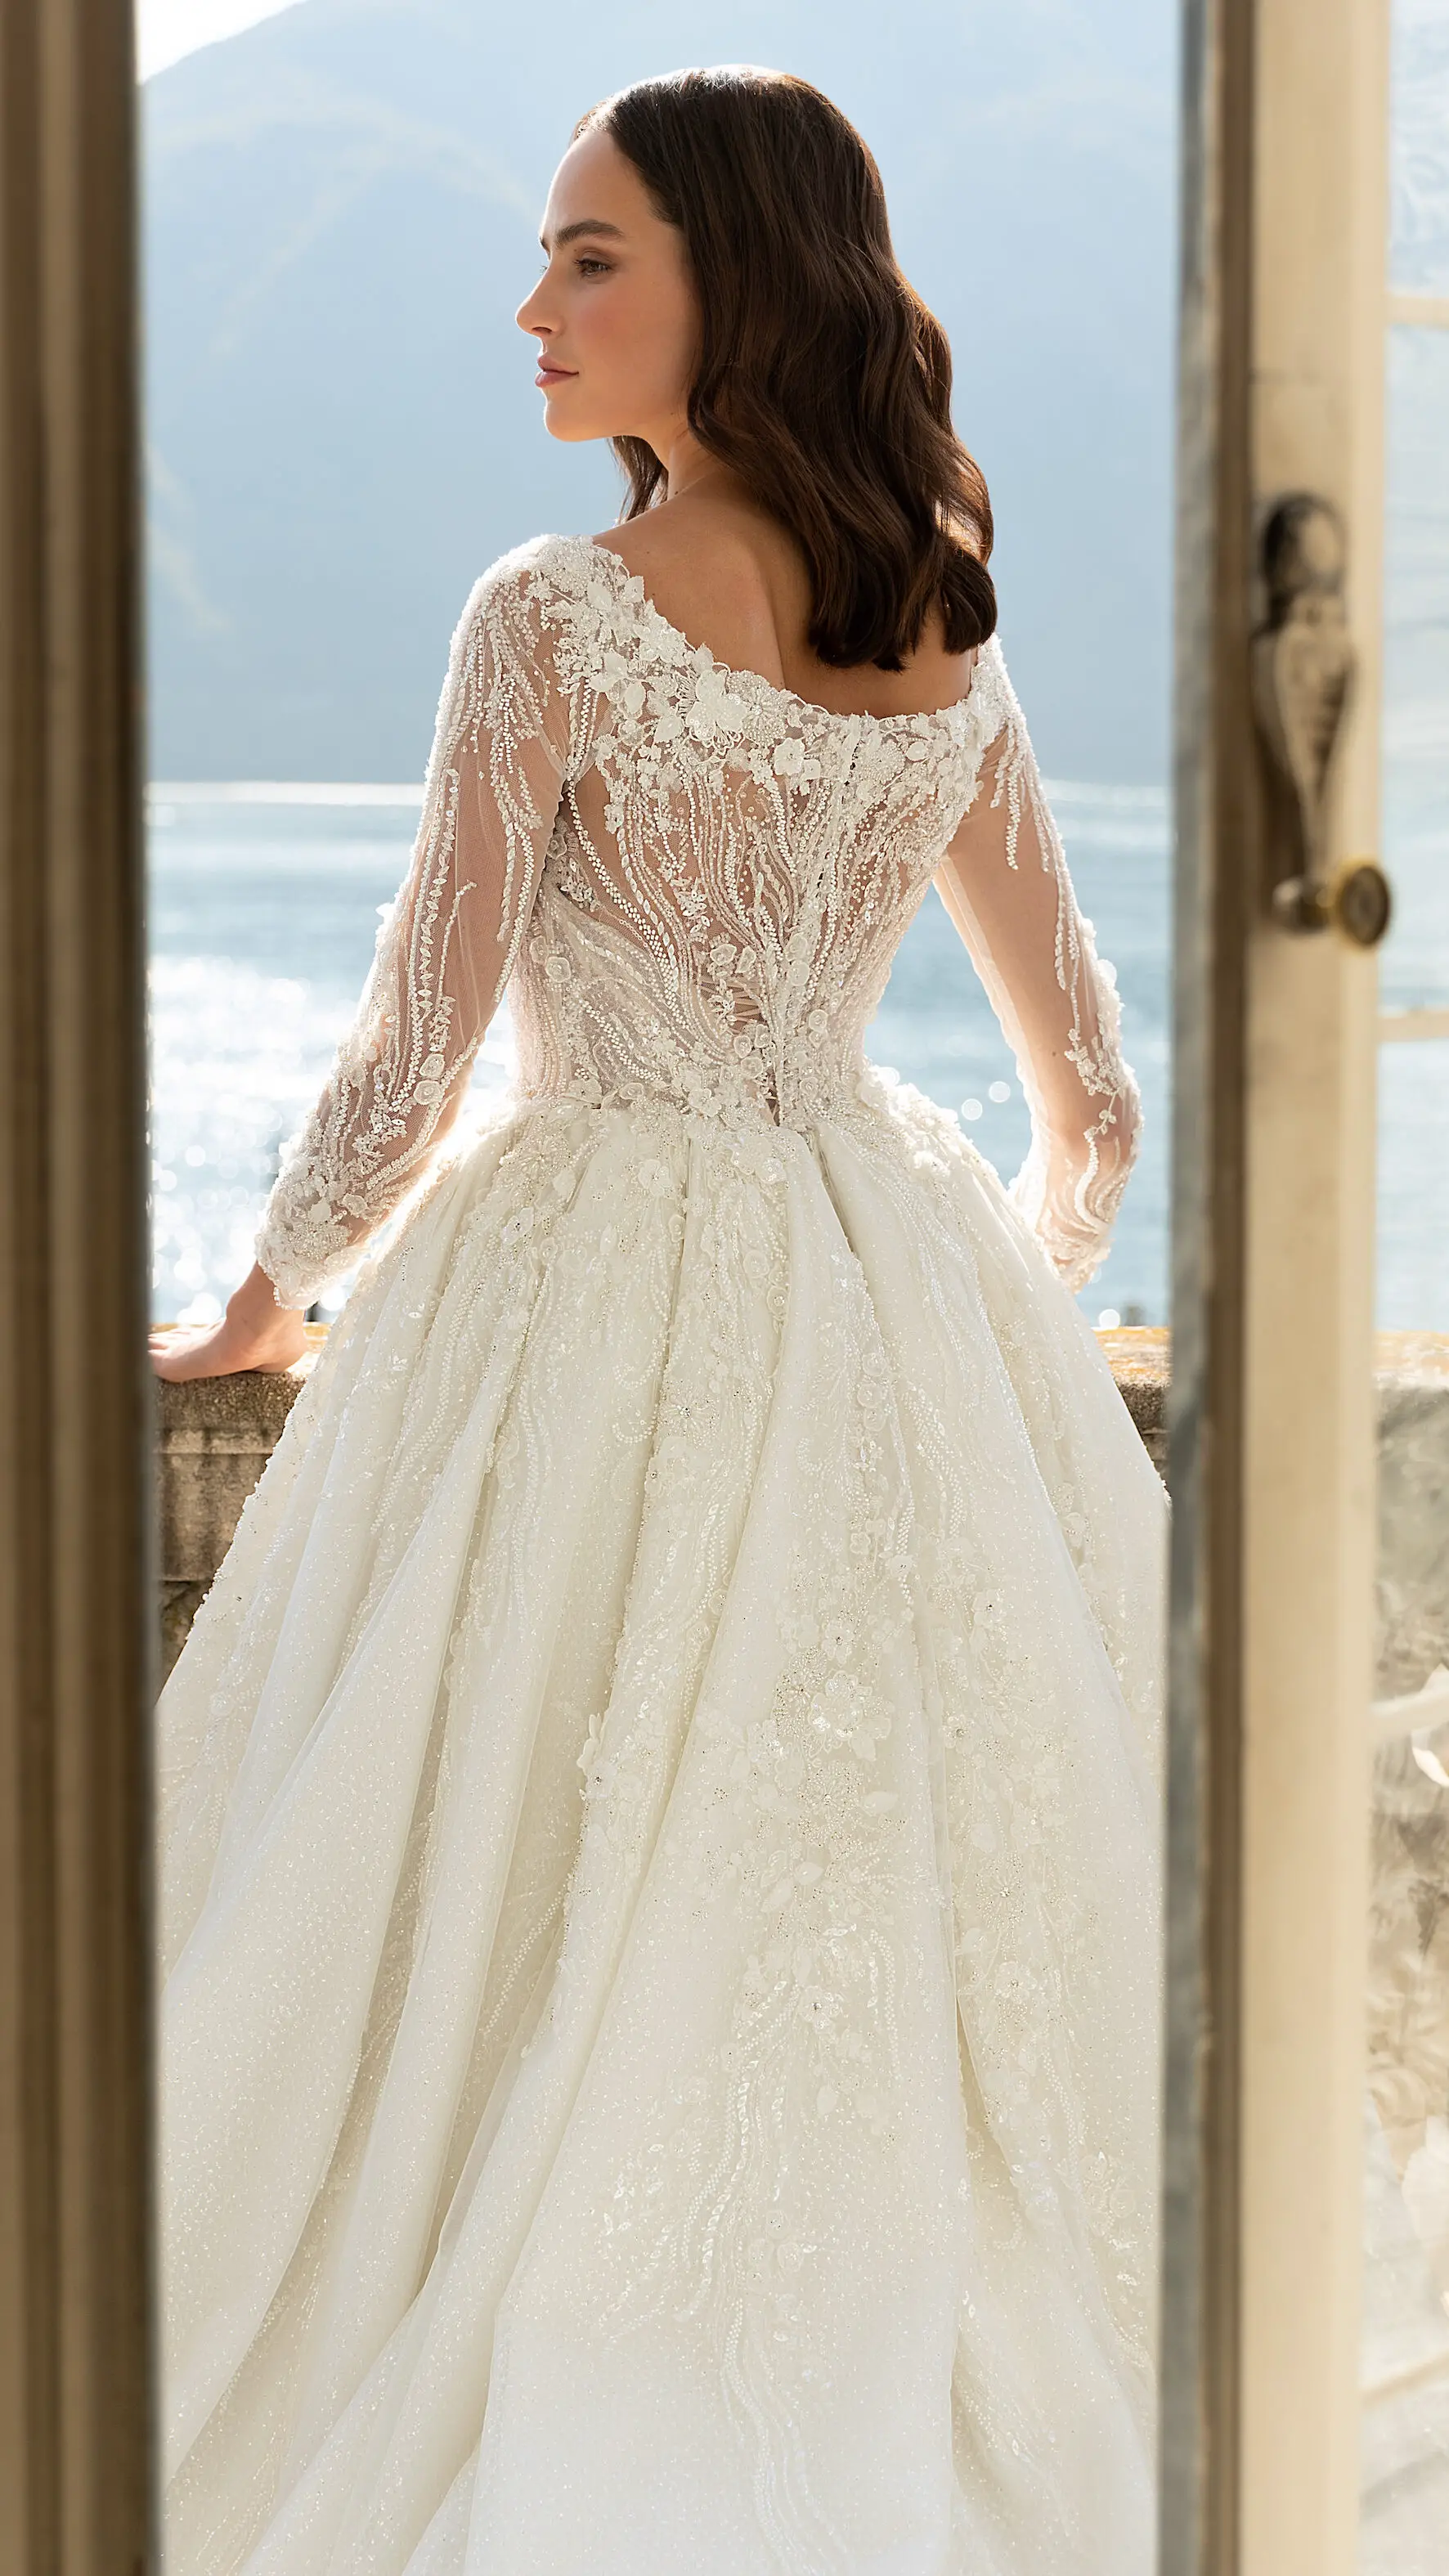 Long sleeves elegant ball gown wedding dress - Crosetta